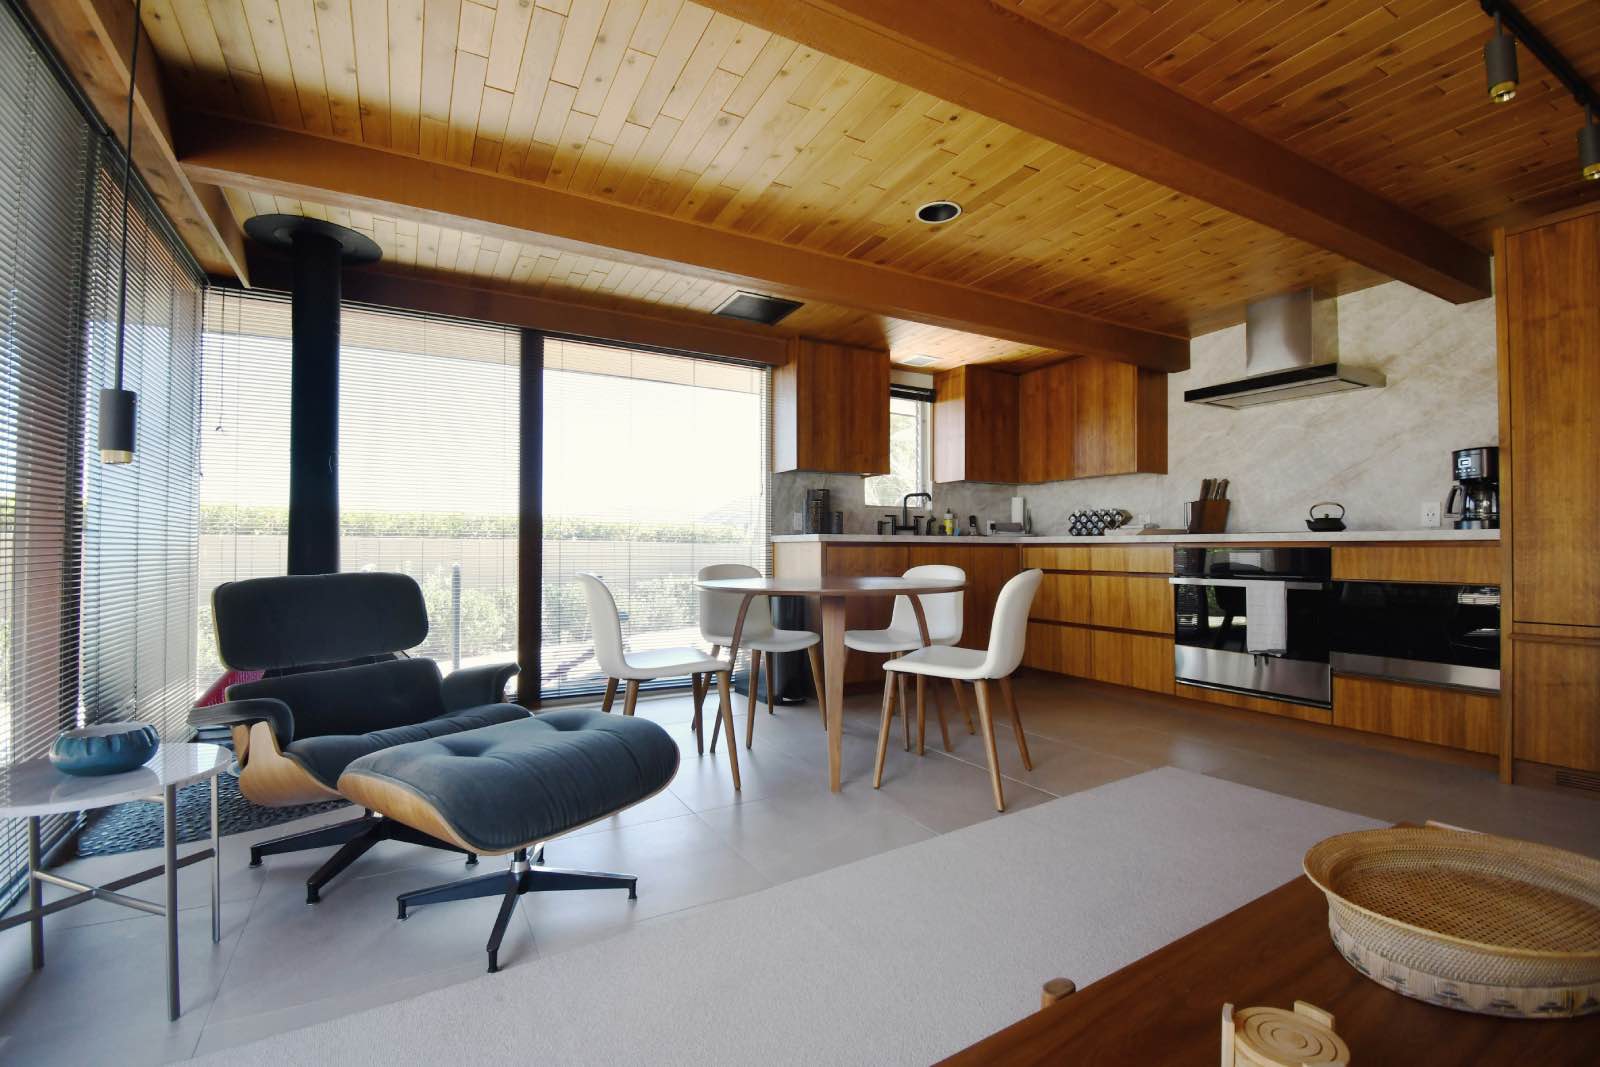 apartamento estudio con cocina de madera moderna, sillón y comedor